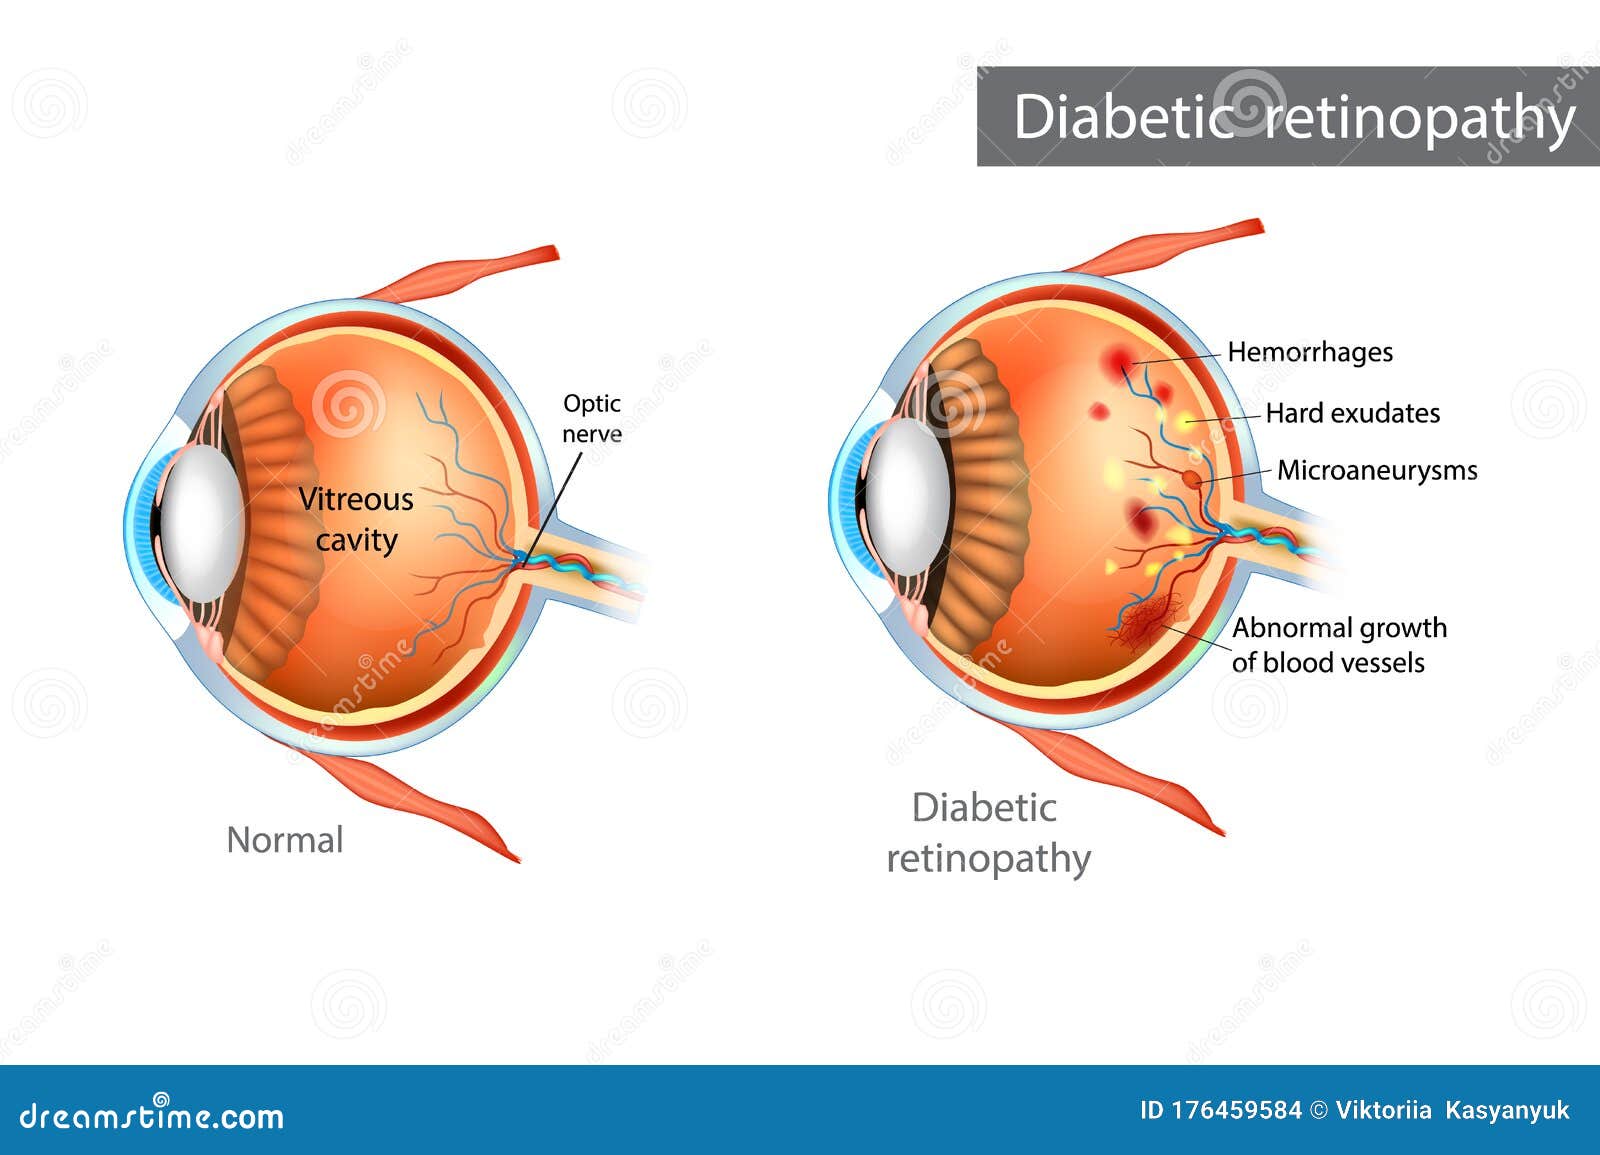 diabetic retinopathy. difference between normal retina and diabetic retinopathy